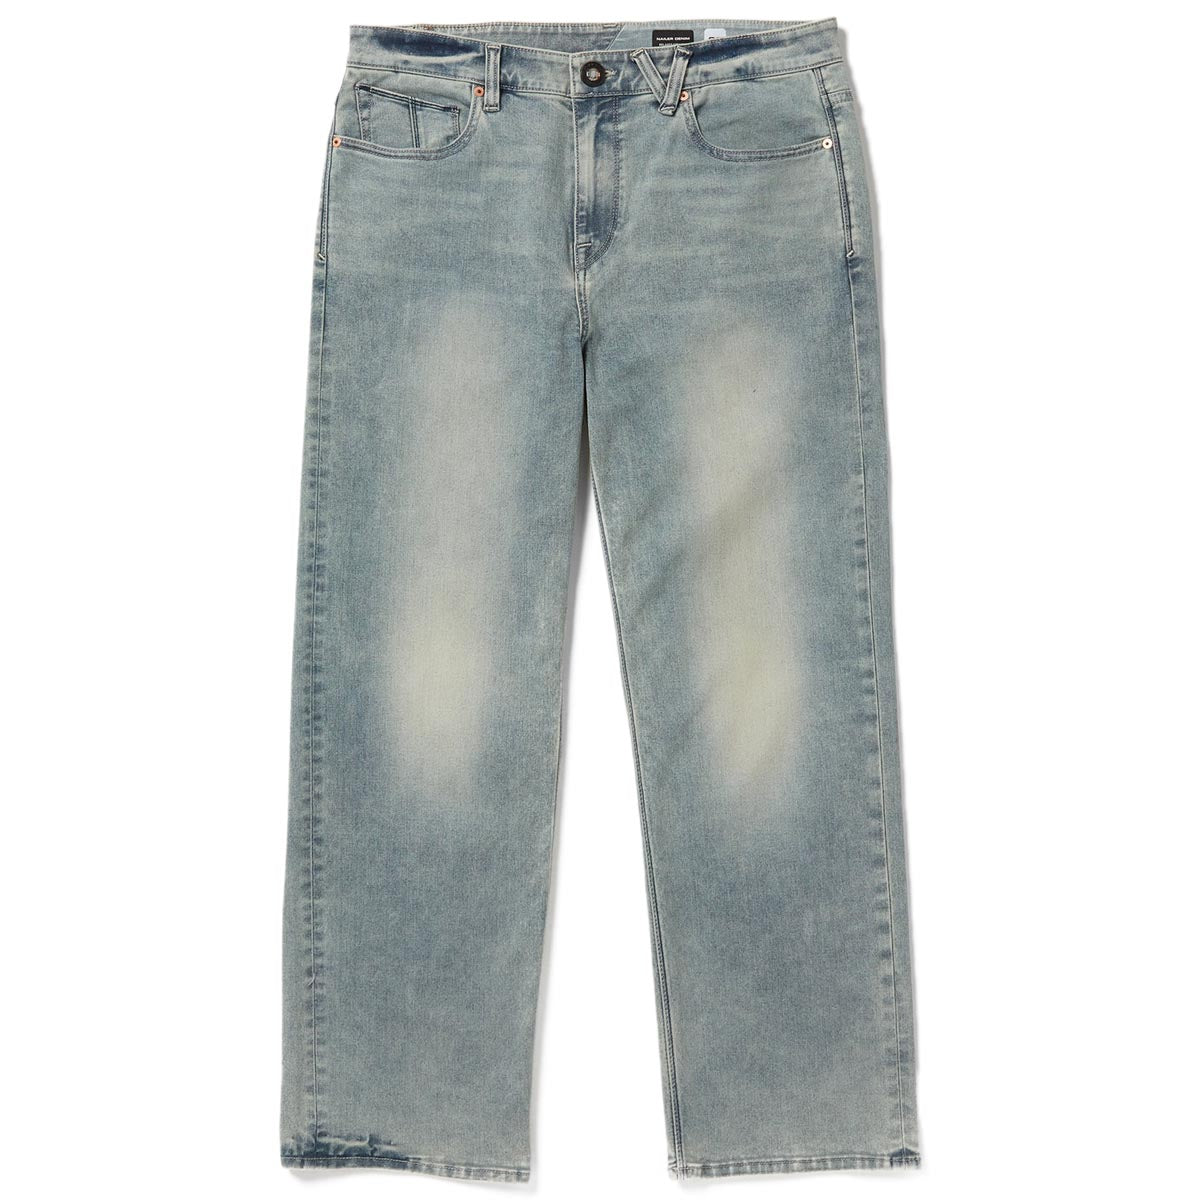 Volcom Nailer Denim Jeans - Sure Shot Light Wash